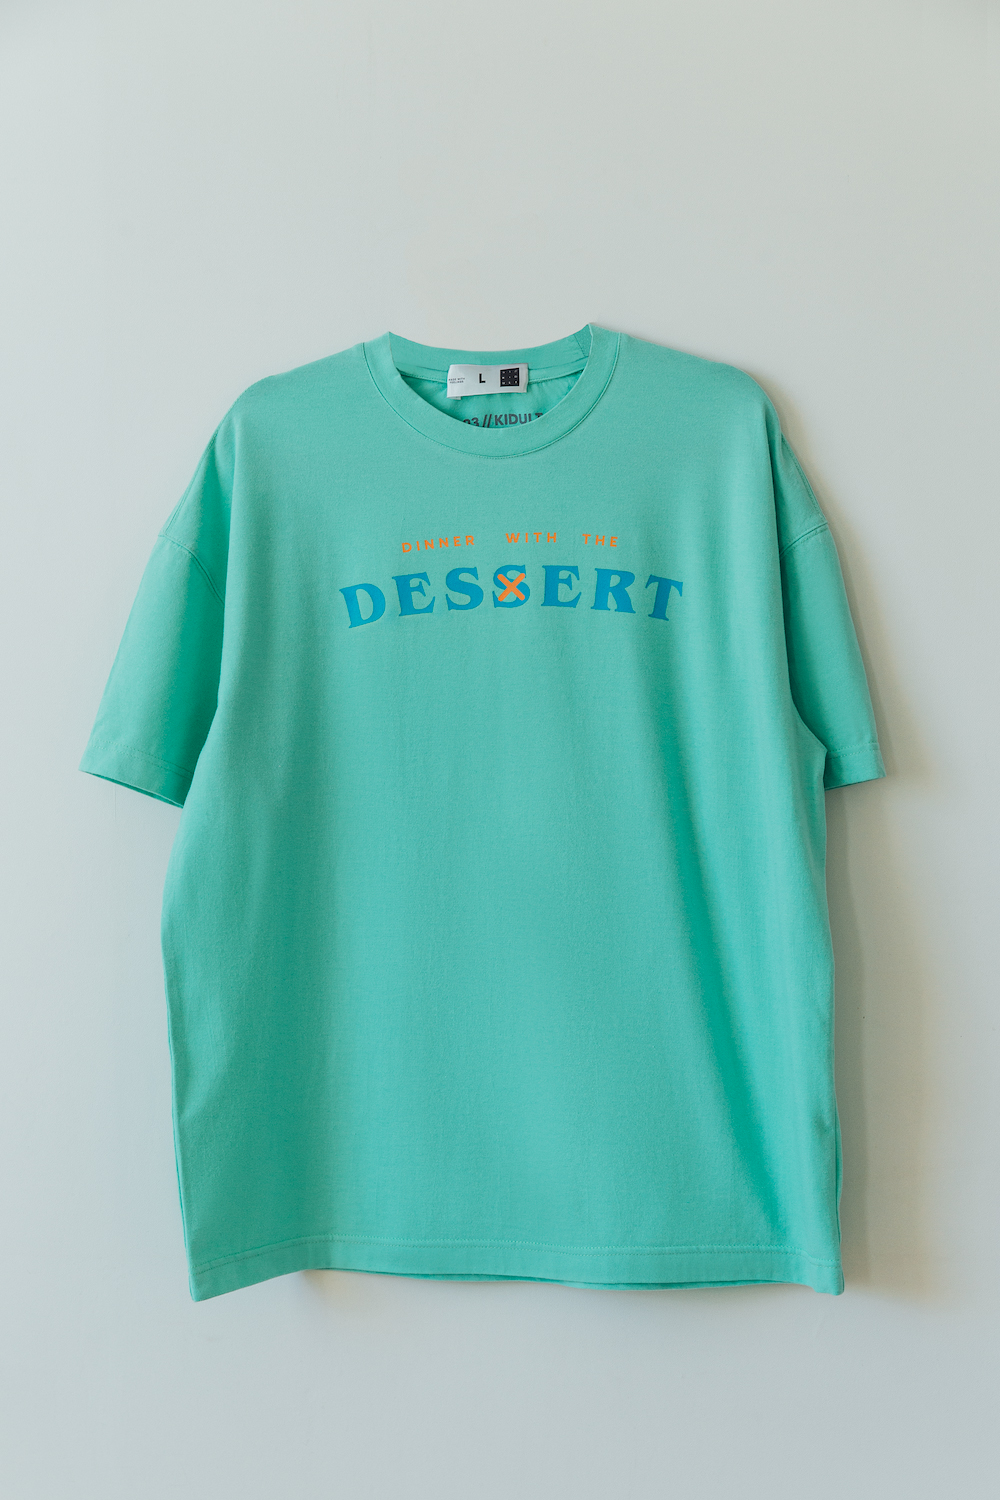 93//Kidult брэнд “Dinner With The Dessert (Desert)” CH.1 цуглуулгаа танилцууллаа (фото 18)